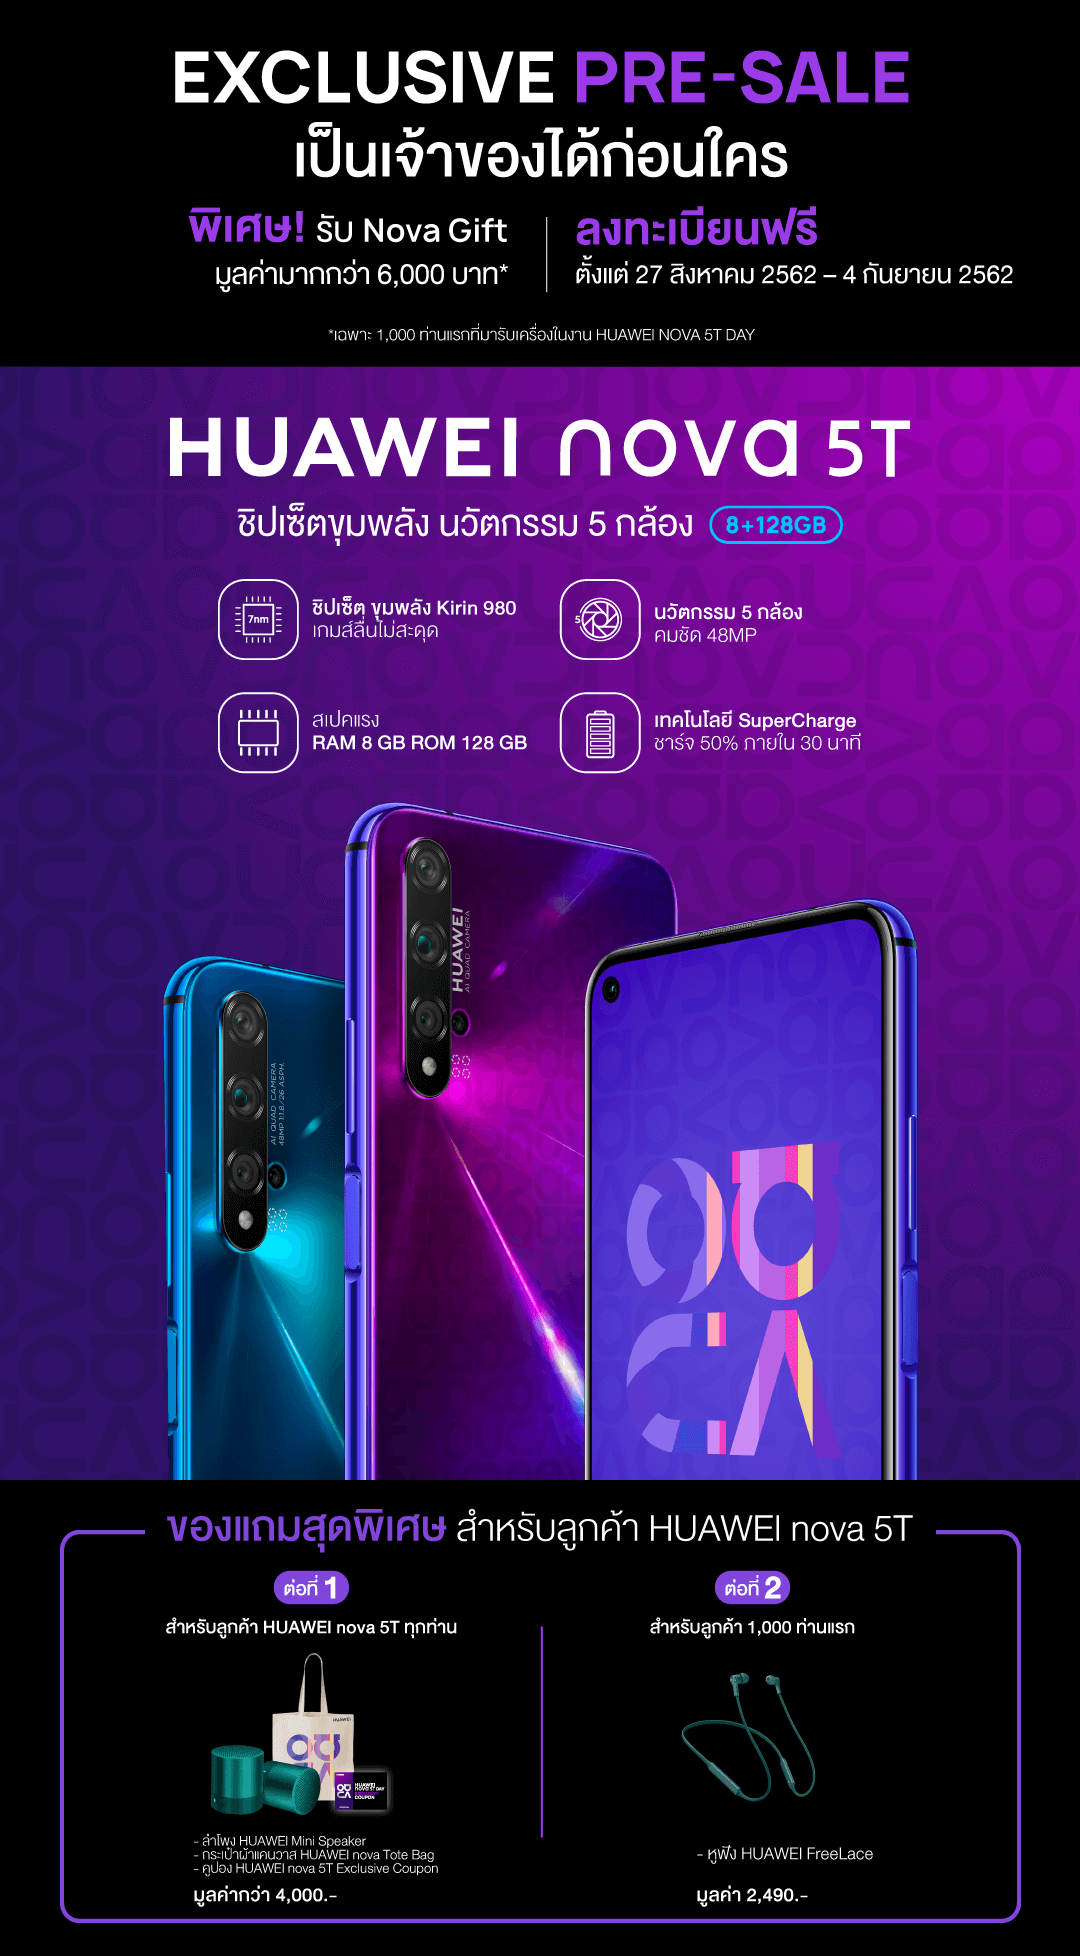 Don't miss HUAWEI nova 5T Pre-order